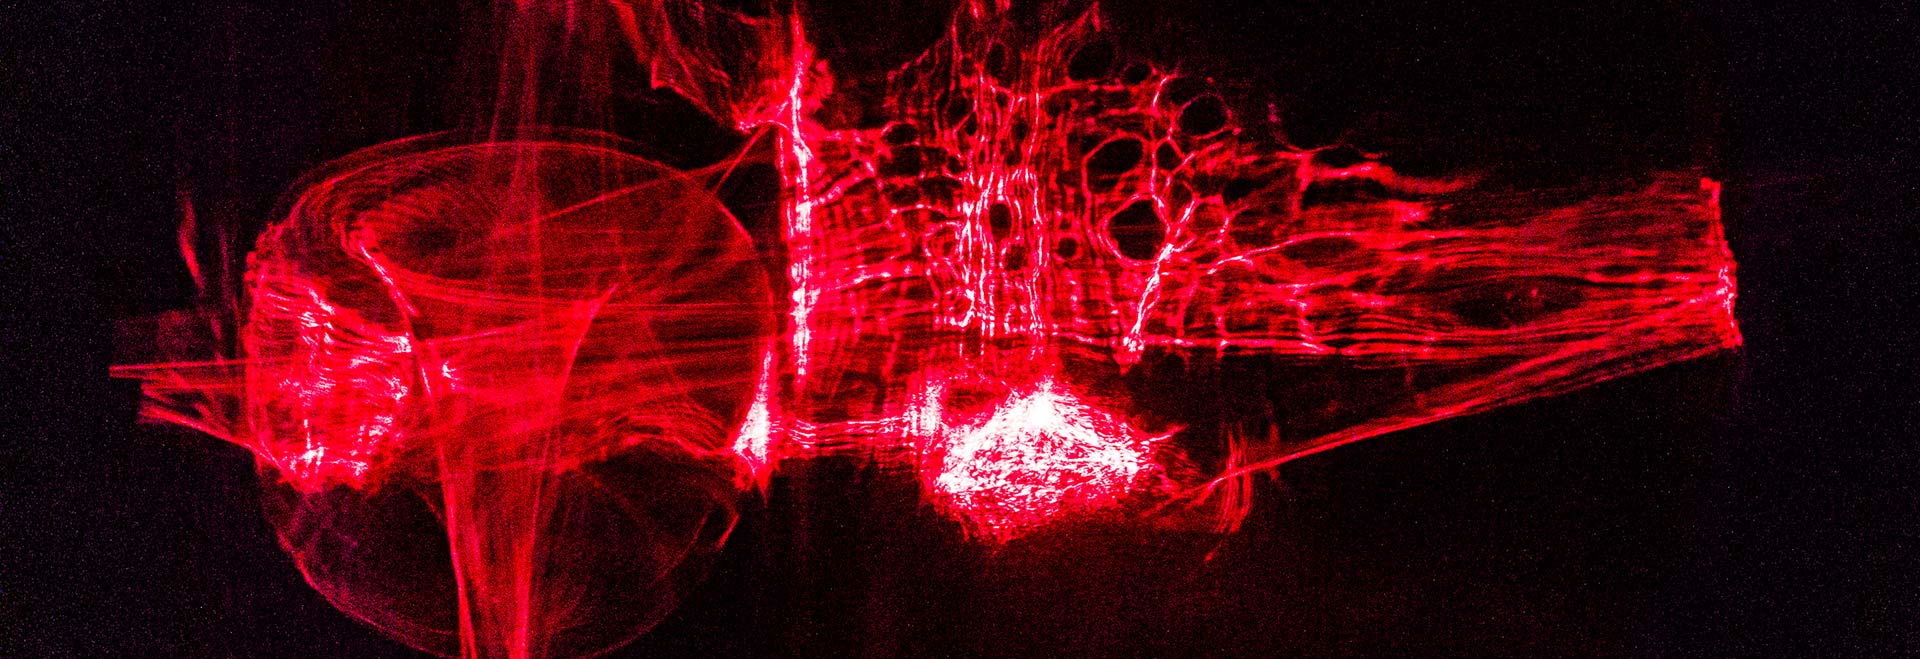 Experimento fotográfico elaborado a partir de holografias abstratas projetadas por feixe de laser